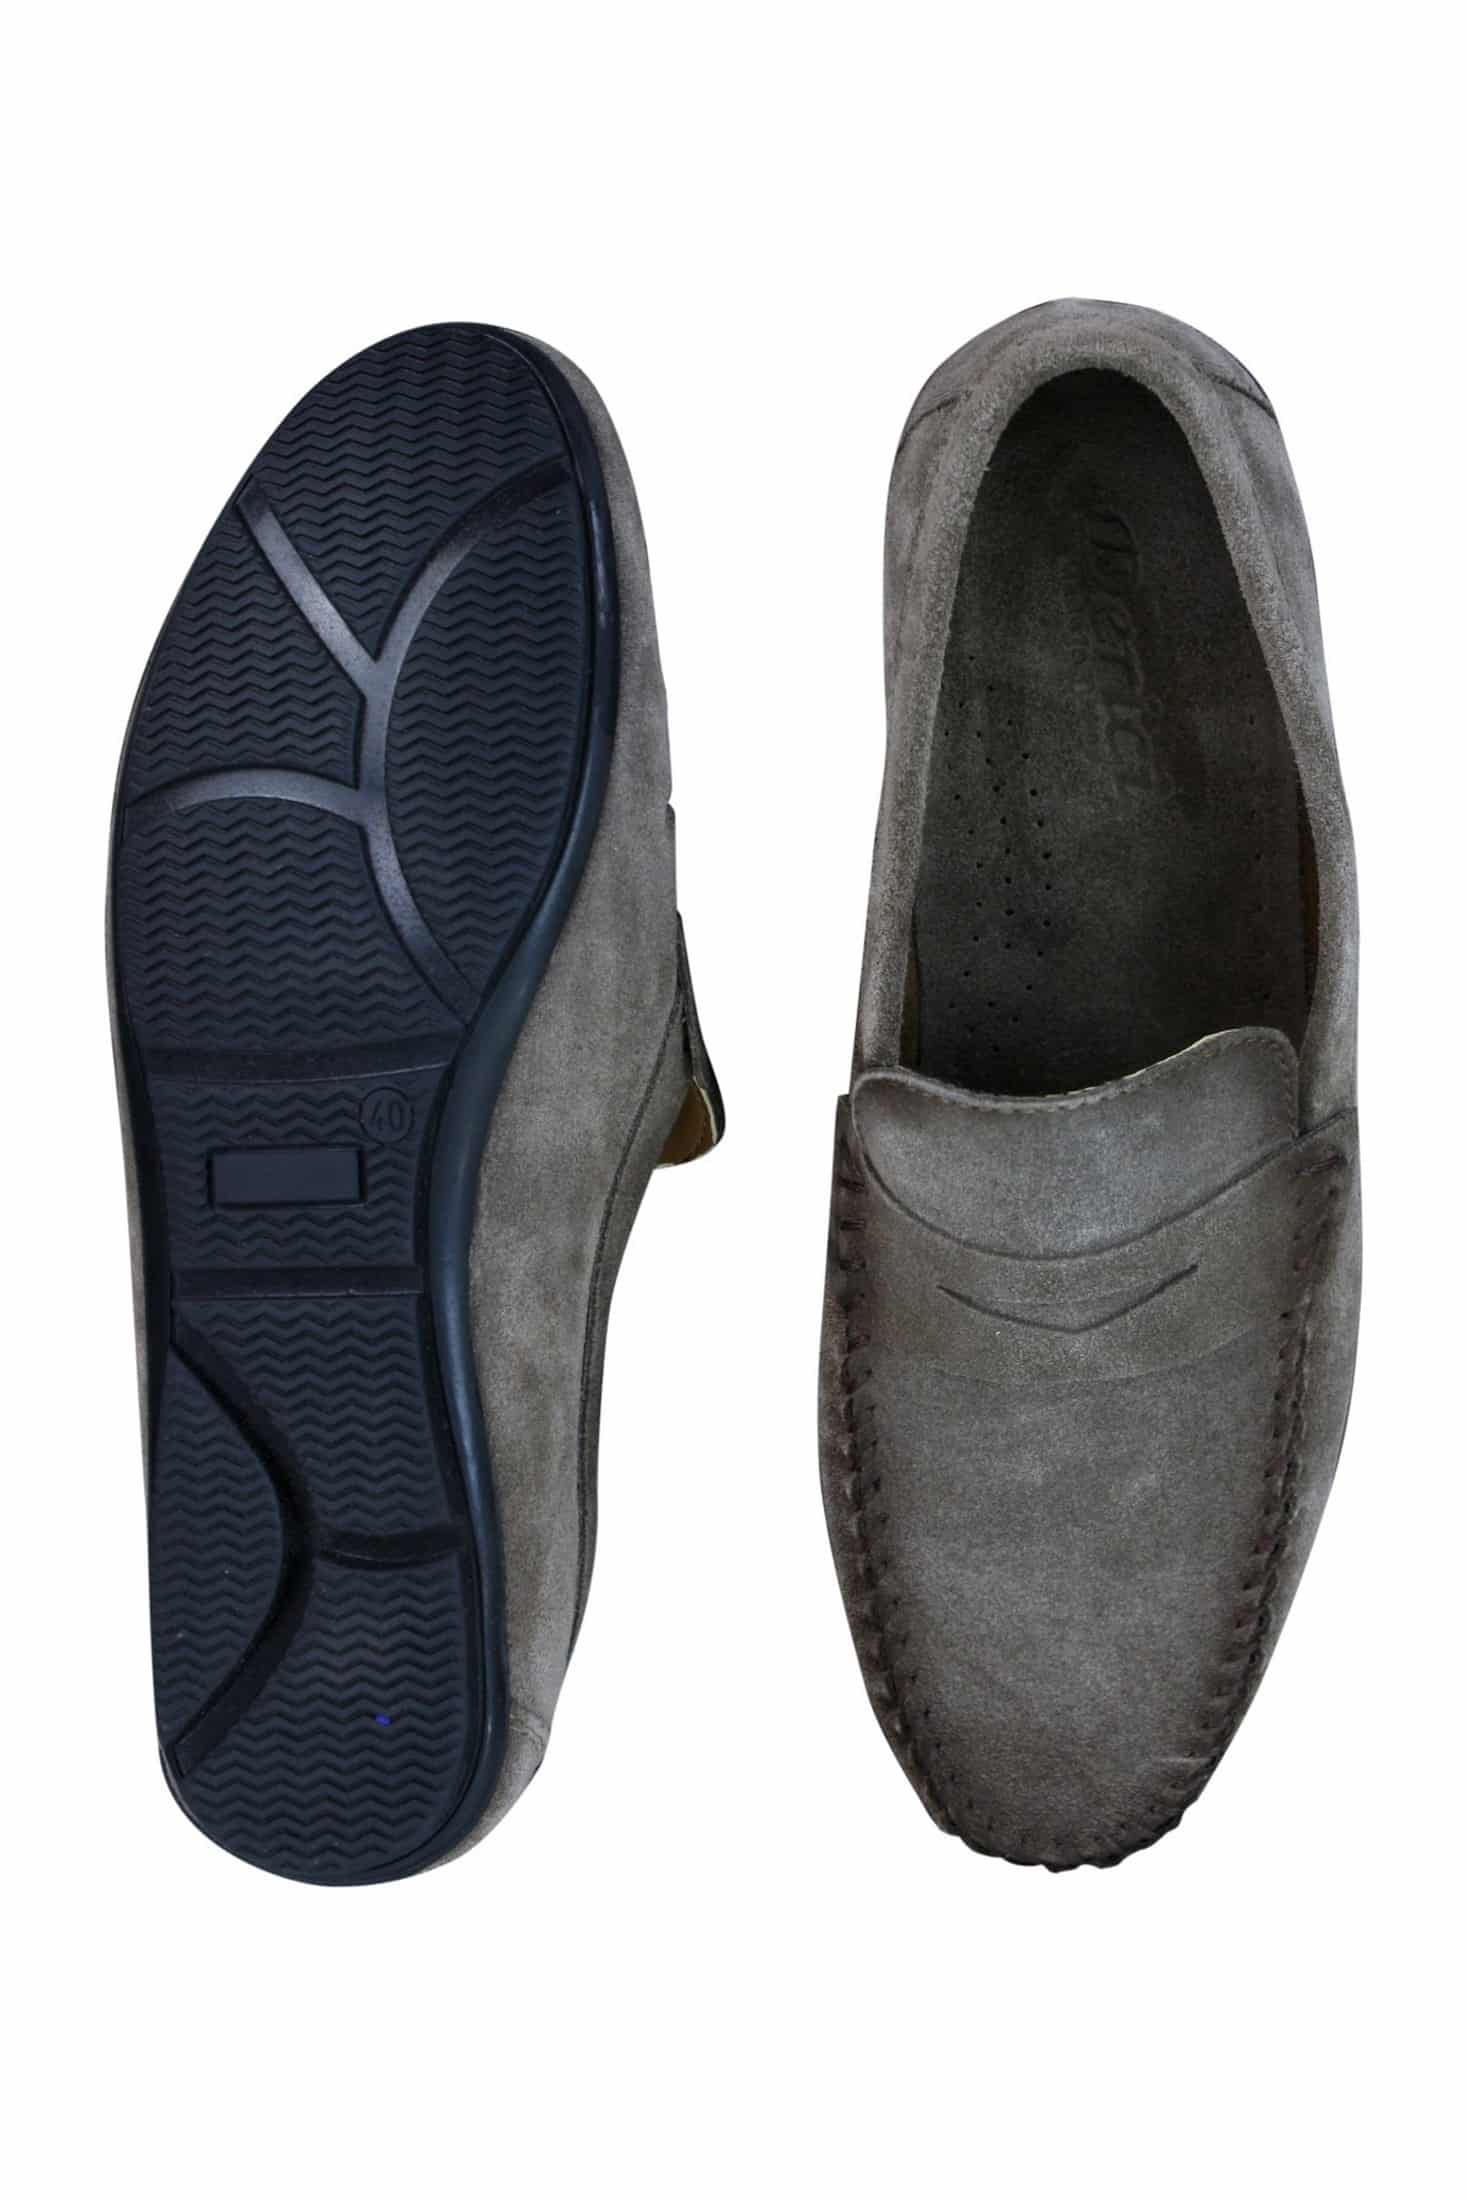 Mens Real Suede Washed Designer Slip On Loafers Moccasins Smart Casual ...